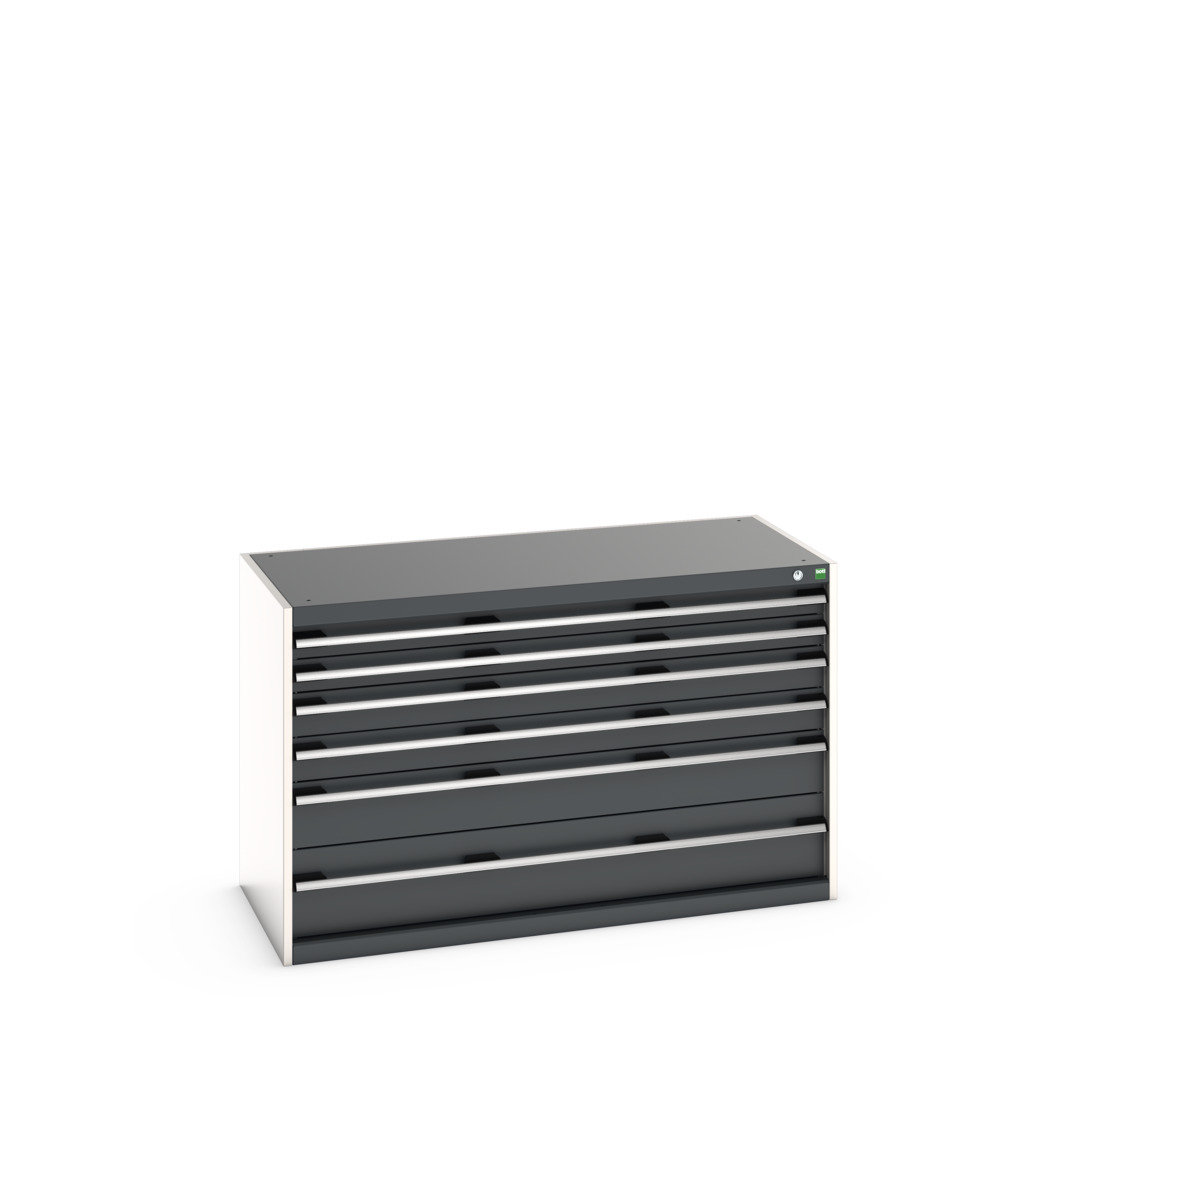 40022109. - cubio drawer cabinet